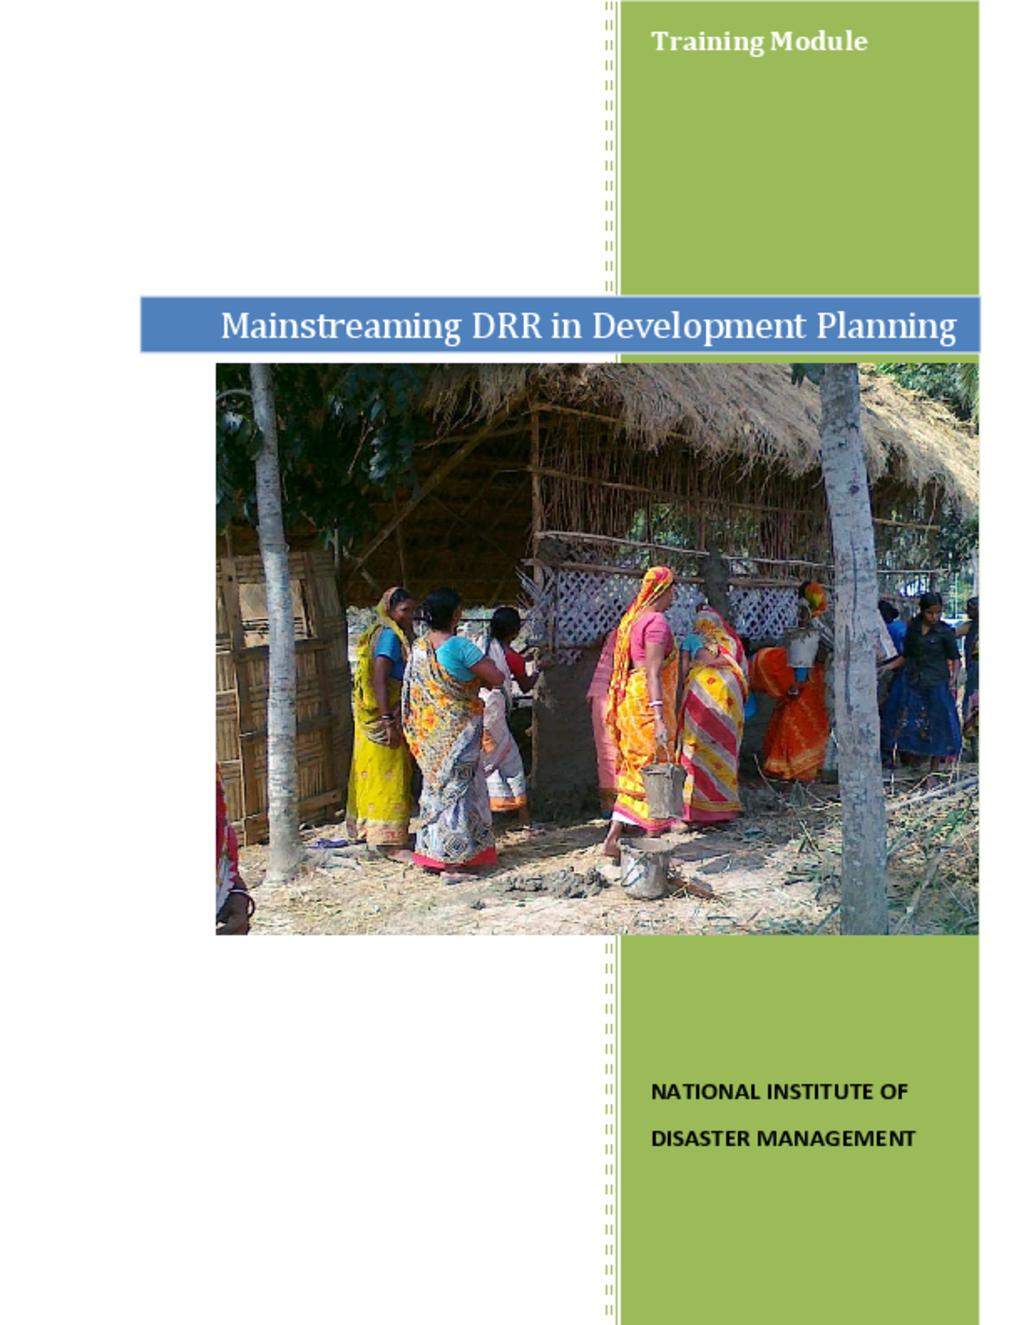 DRR in development Planning